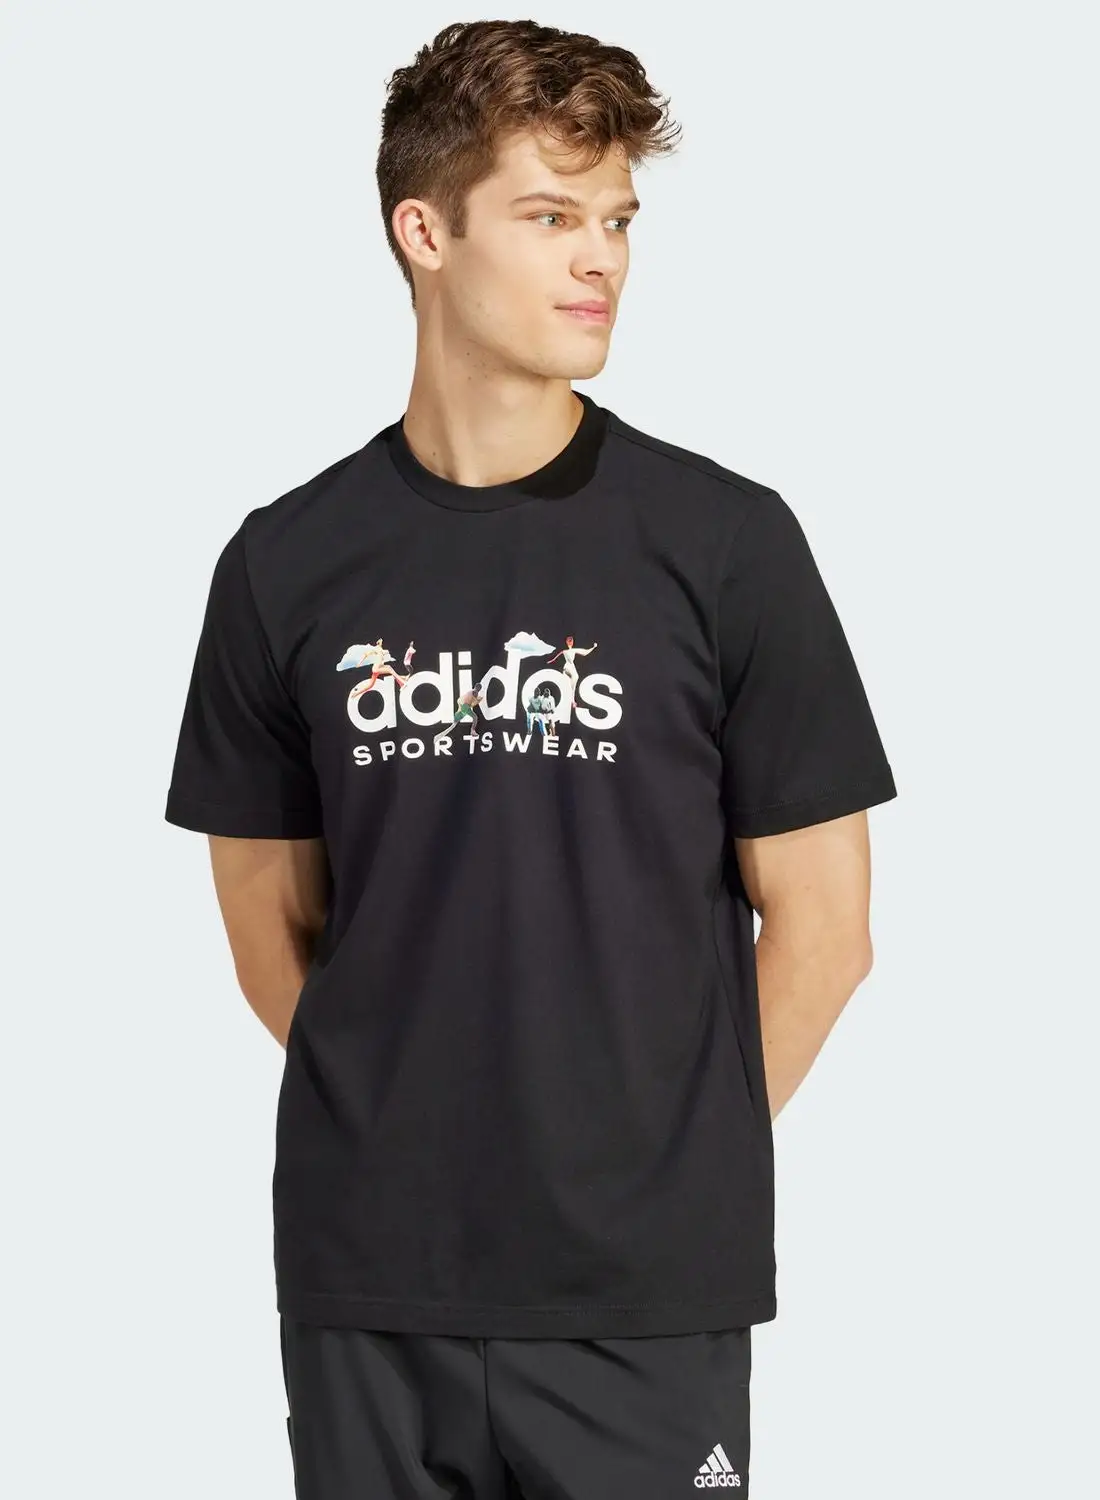 Adidas Landscape Sportswear T-Shirt